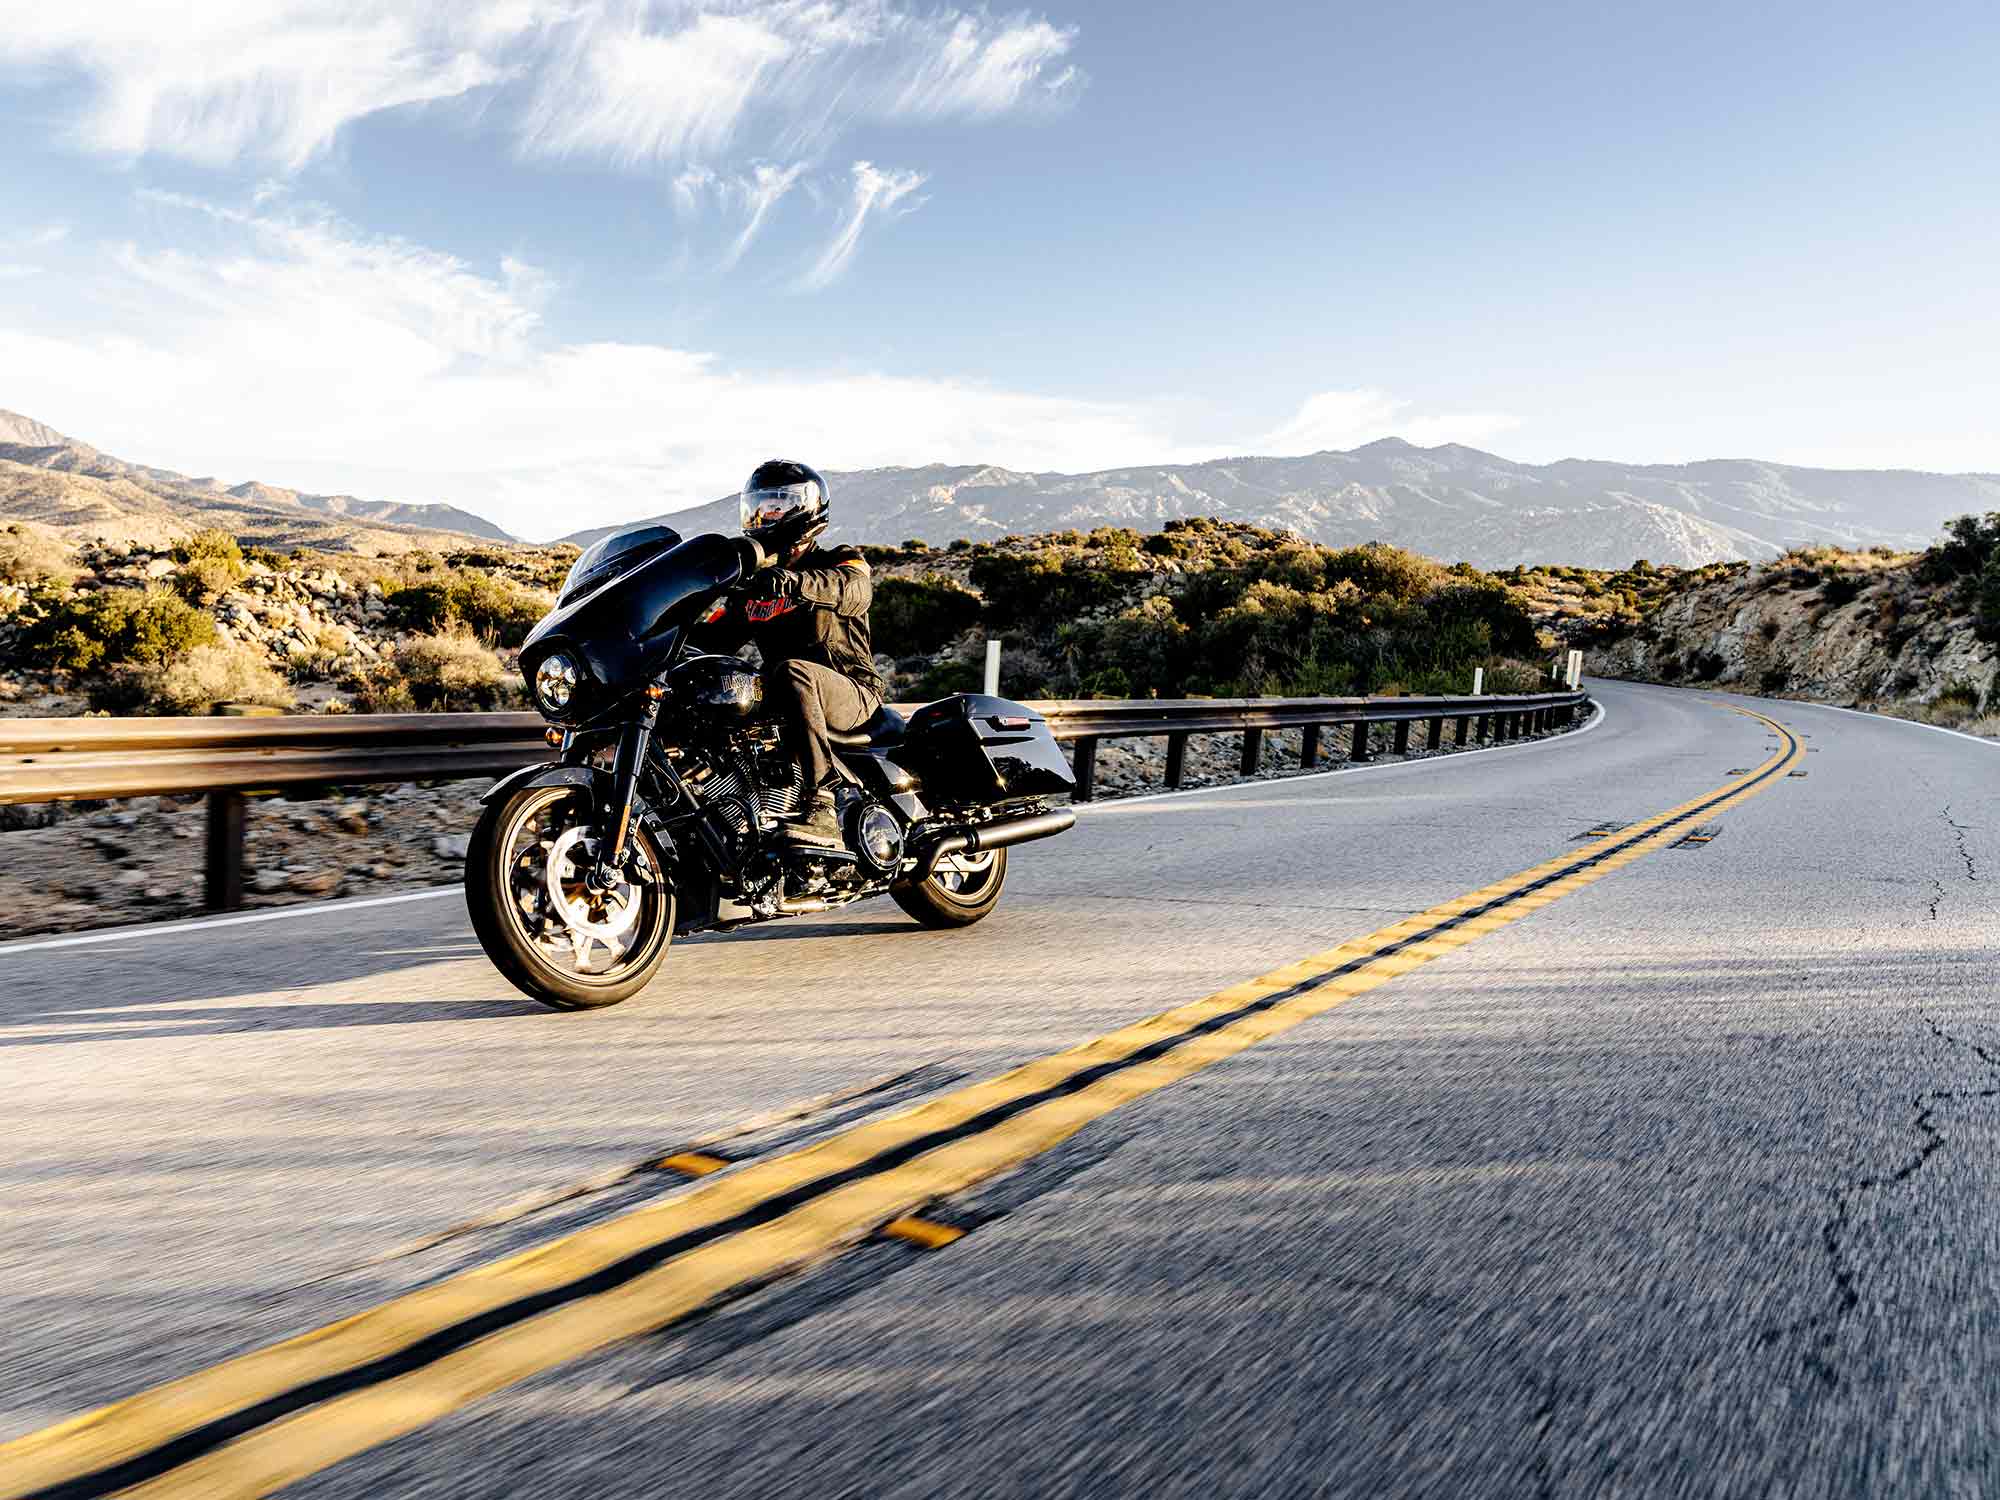 2022 Harley-Davidson Street Glide ST First Look